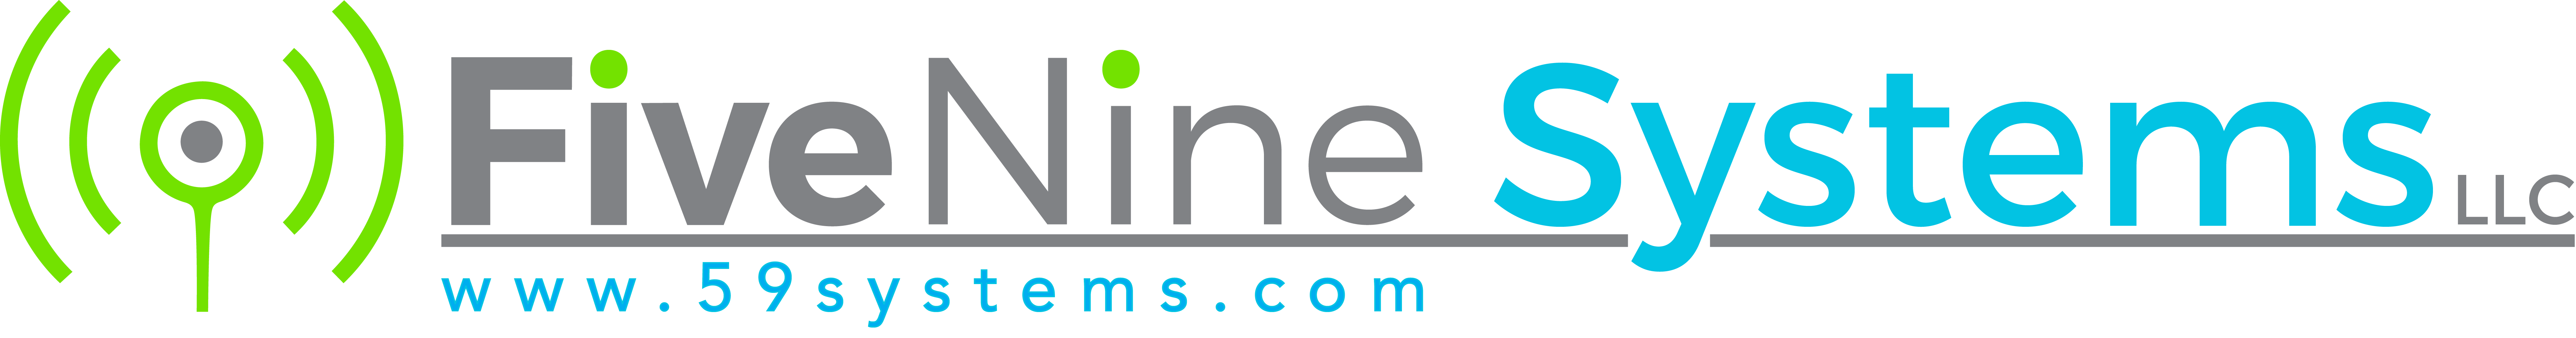 FiveNine Systems LLC